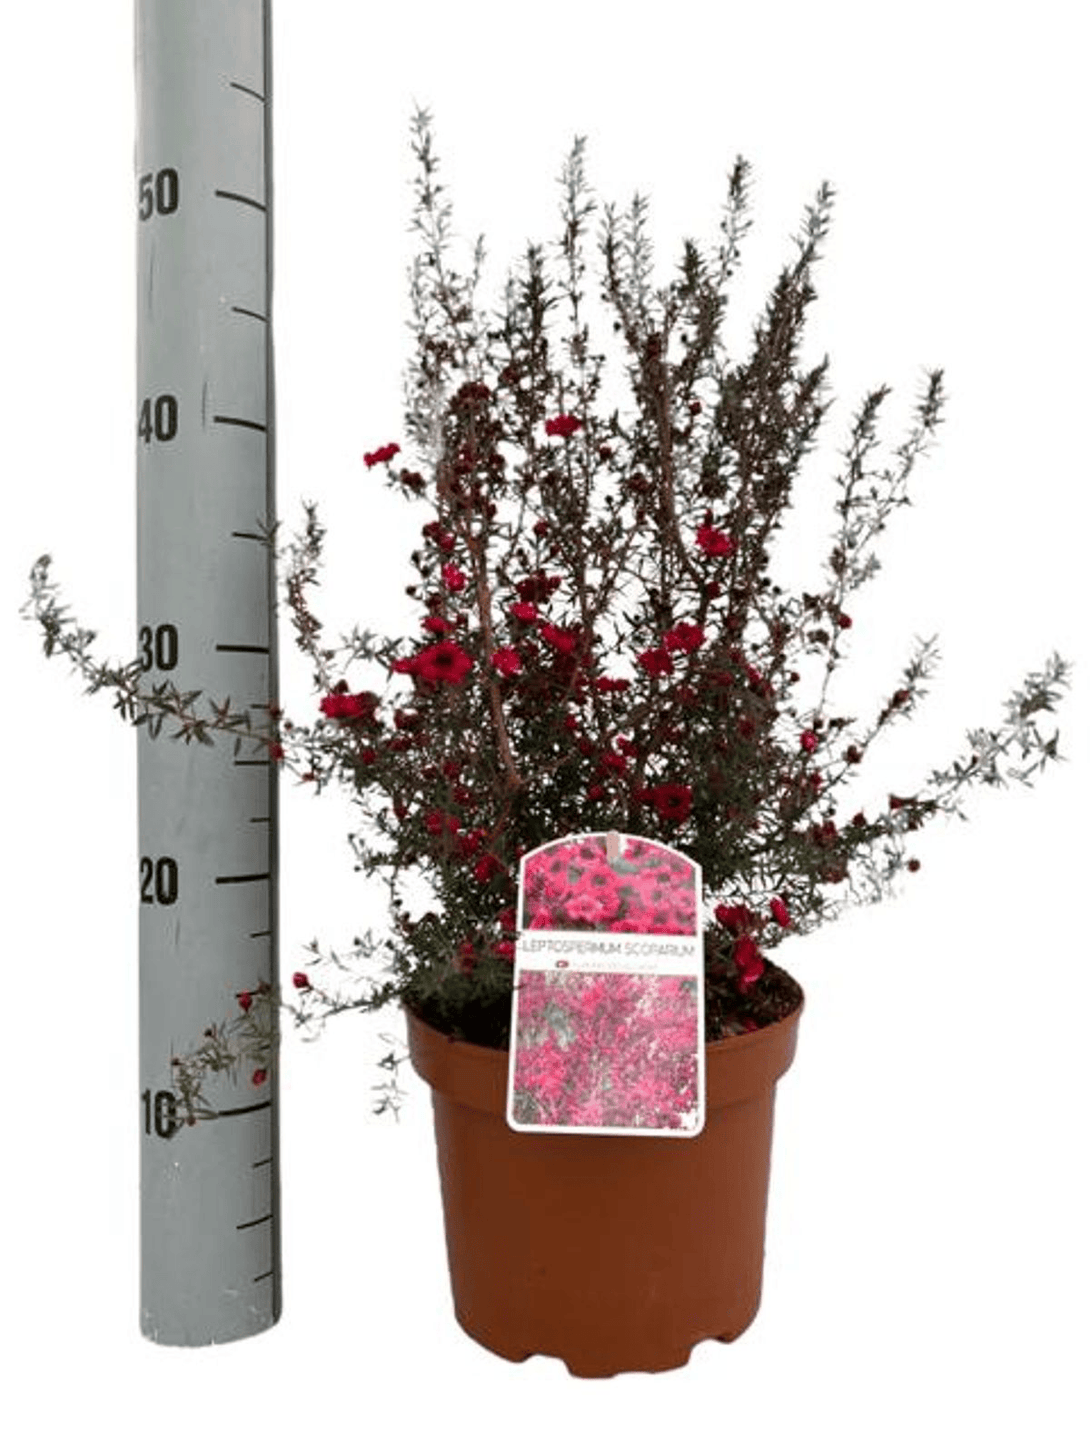 Leptospermum scoparium 'Red Damask' (Tea Tree, Manuka)